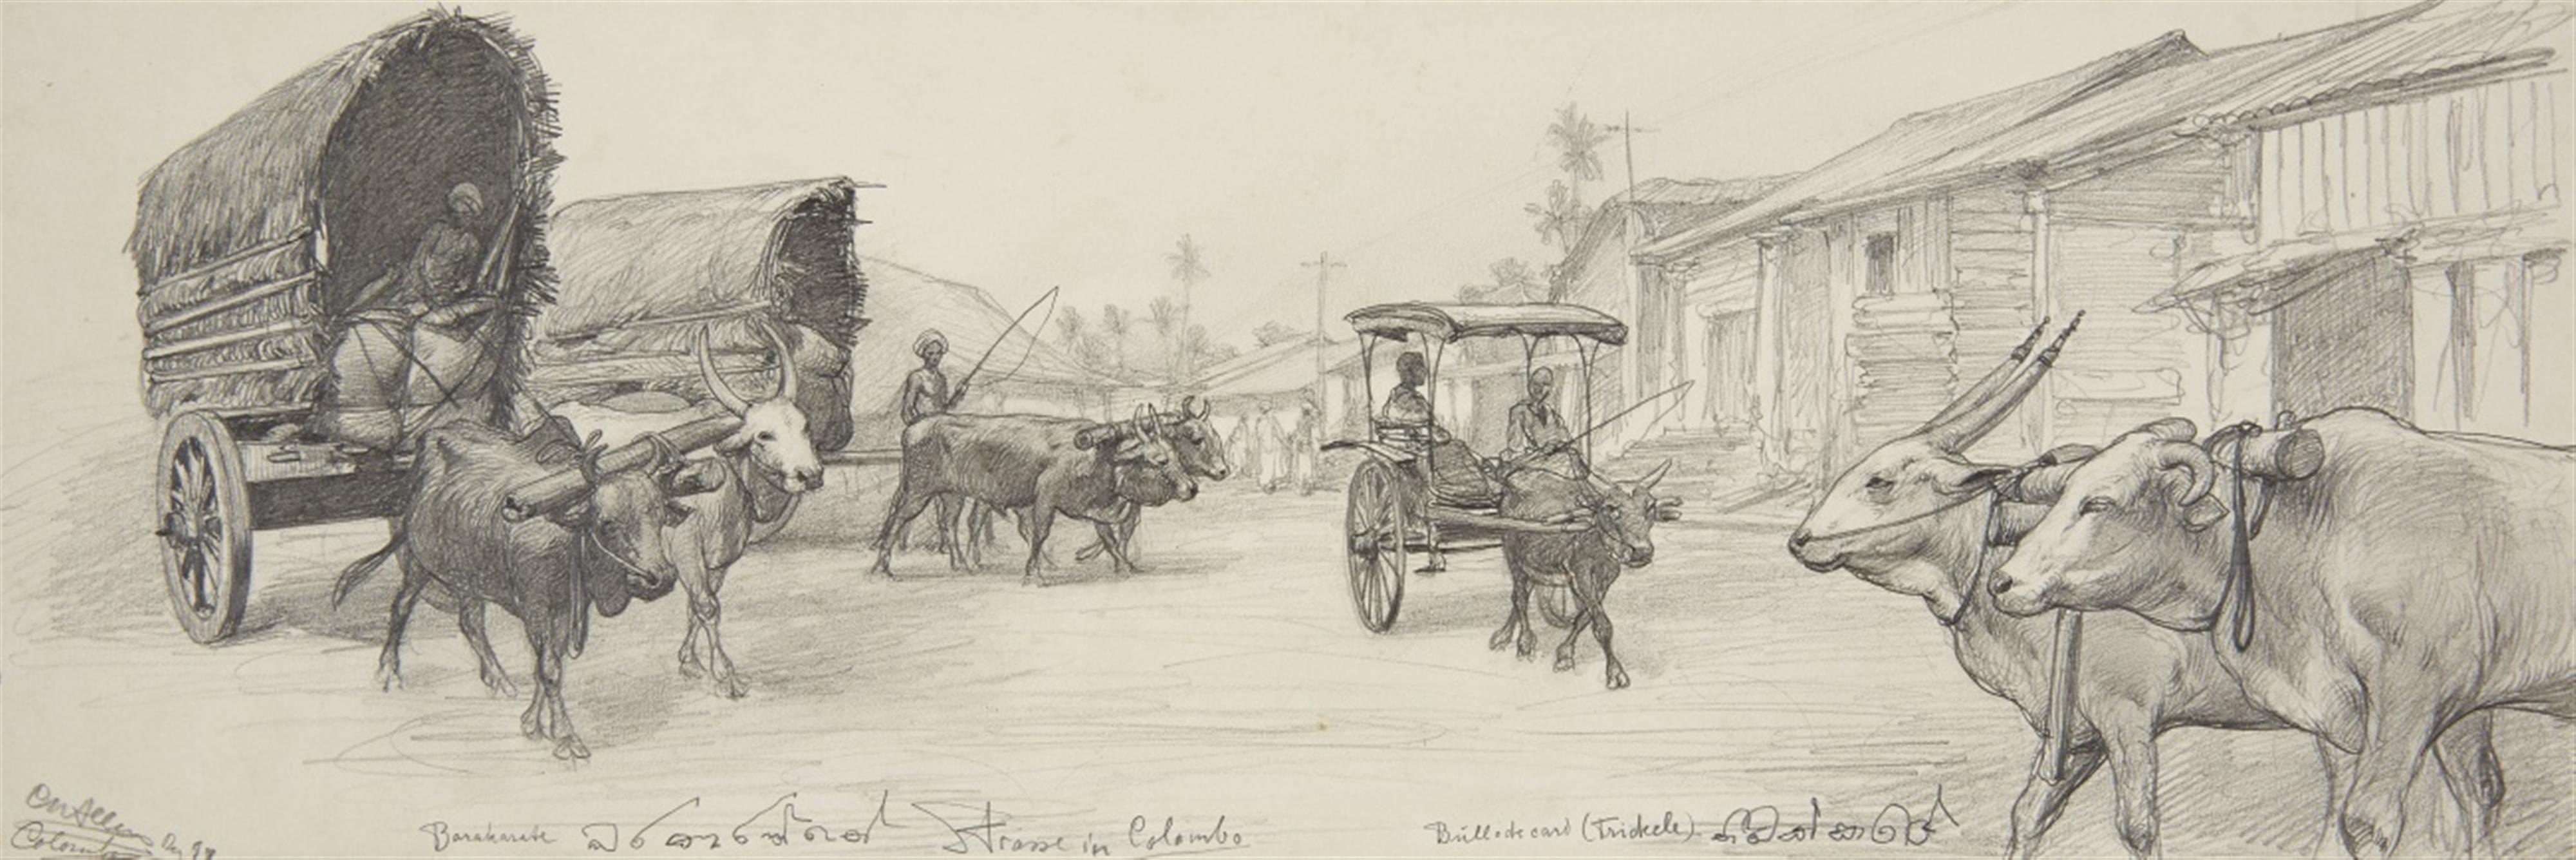 Unknown Artist 19th century - A Street in Colombo, Ceylon - image-1